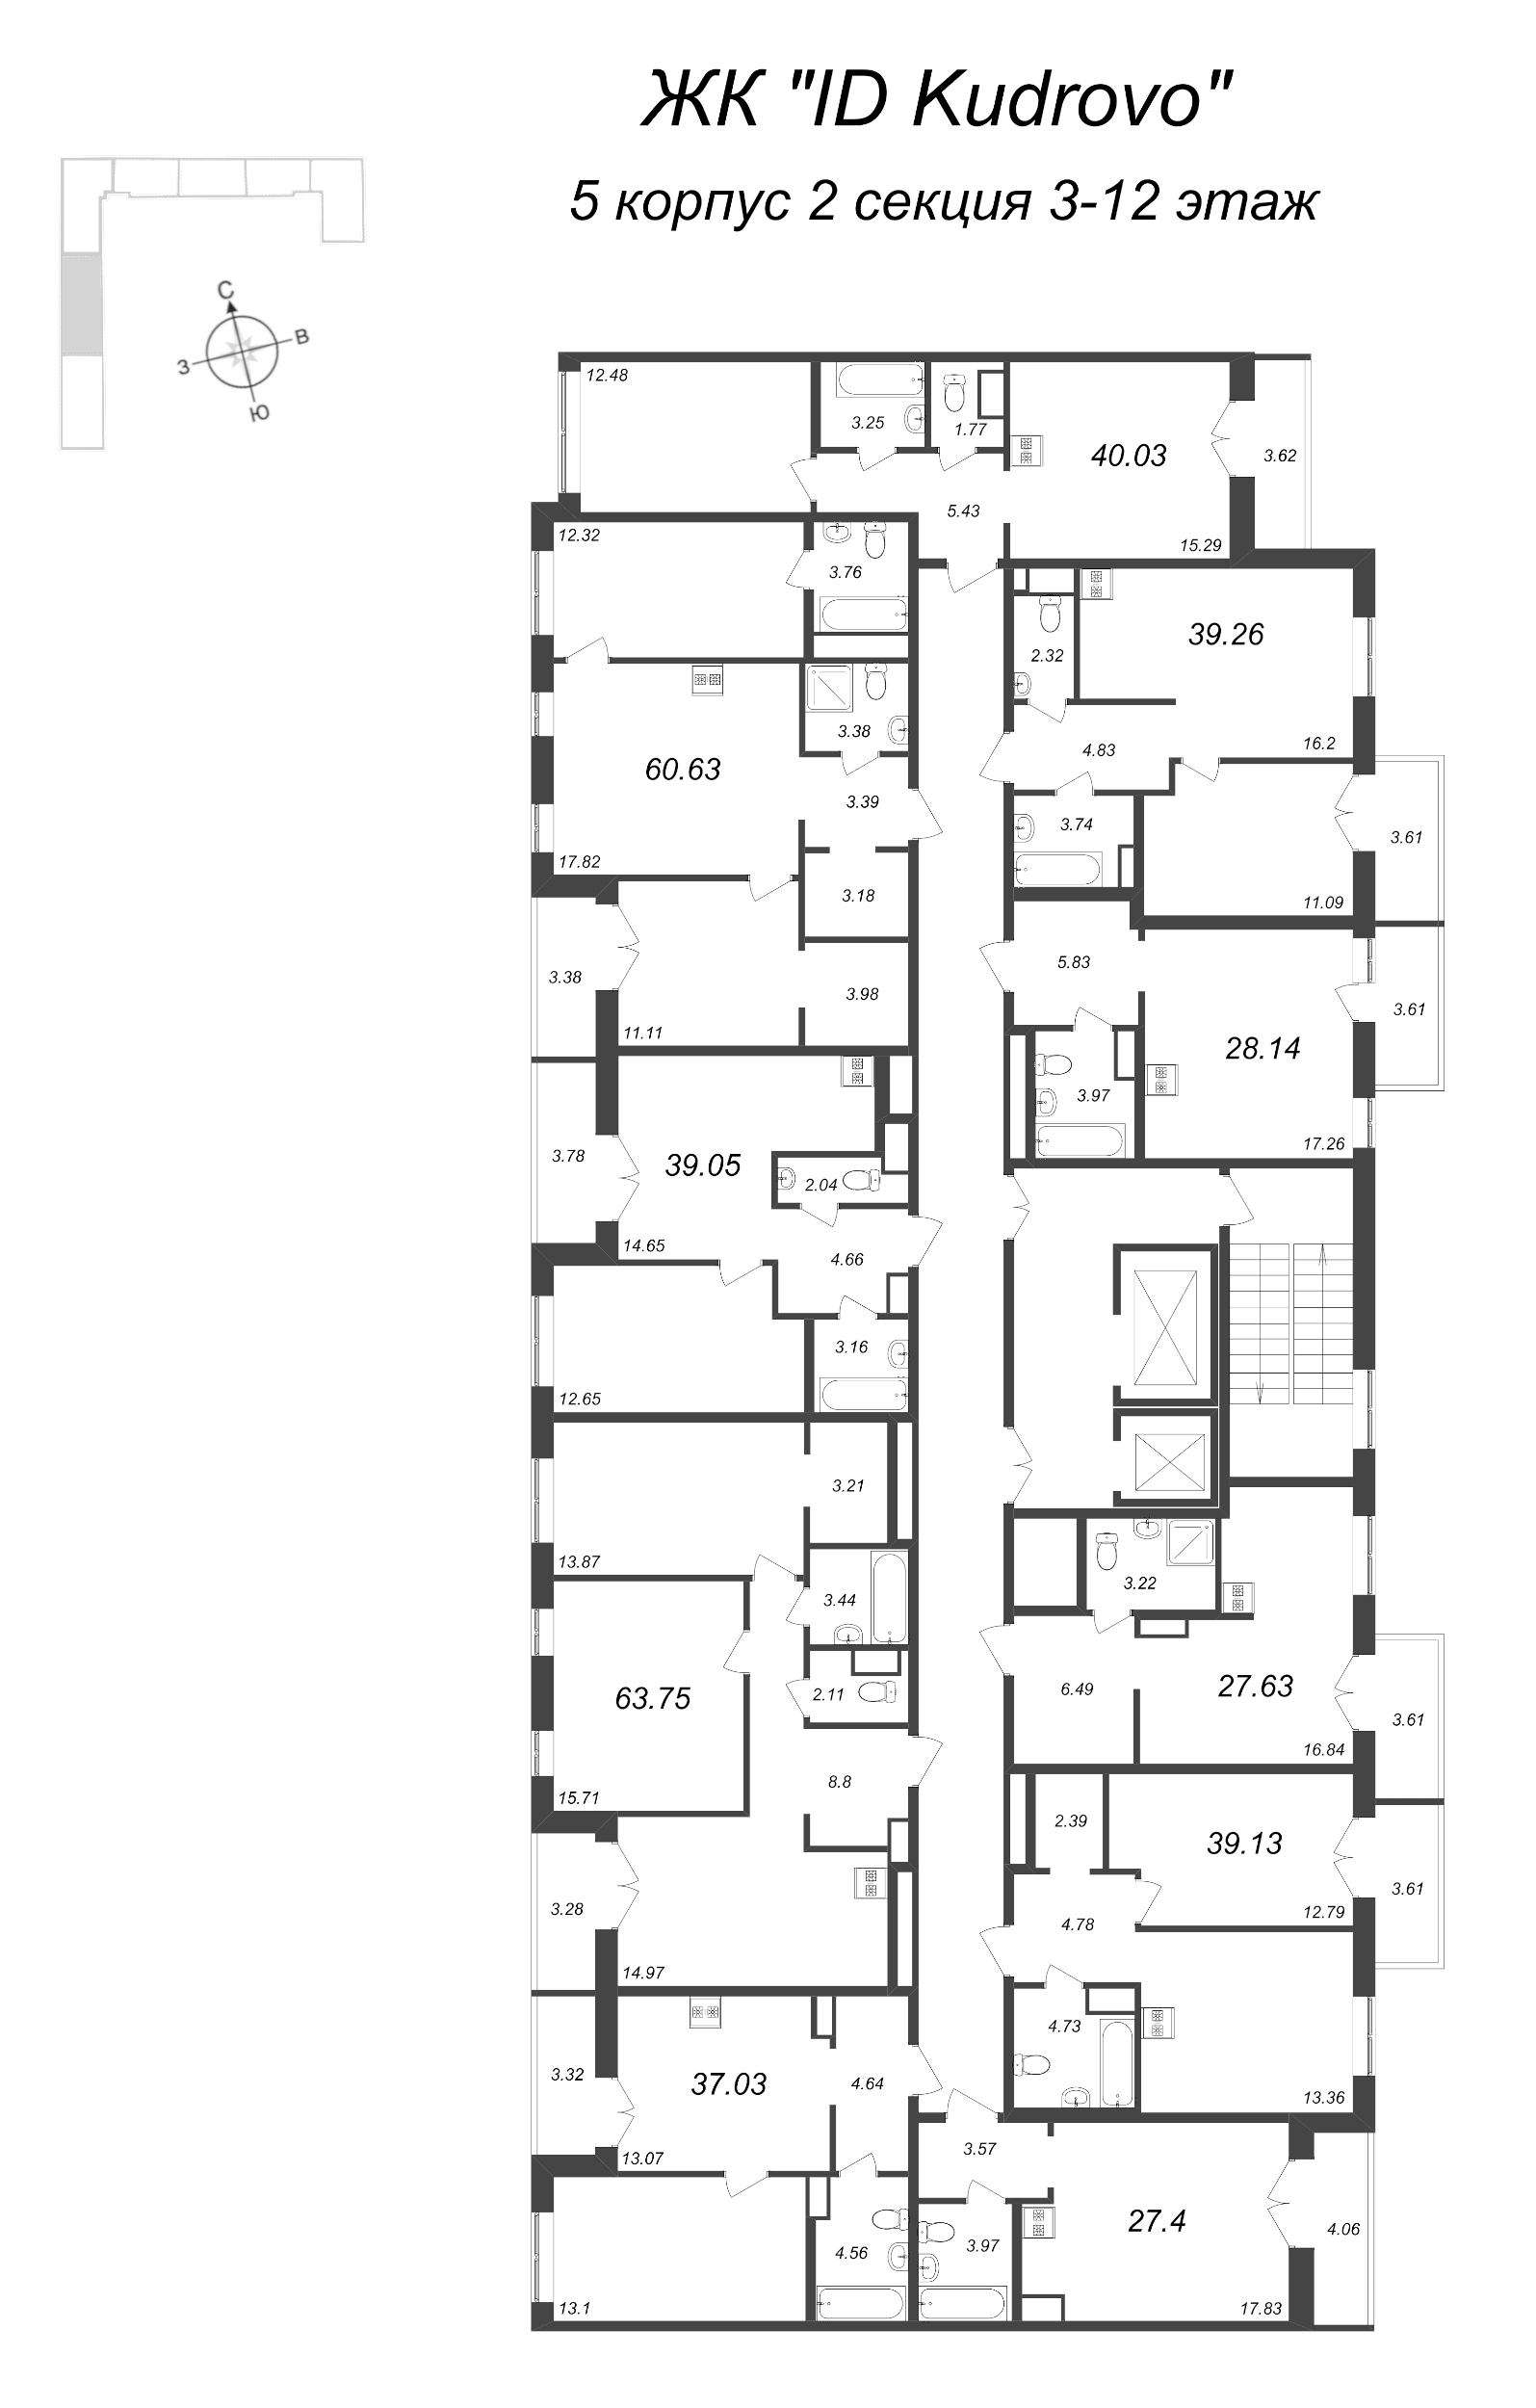 3-комнатная (Евро) квартира, 60.63 м² - планировка этажа